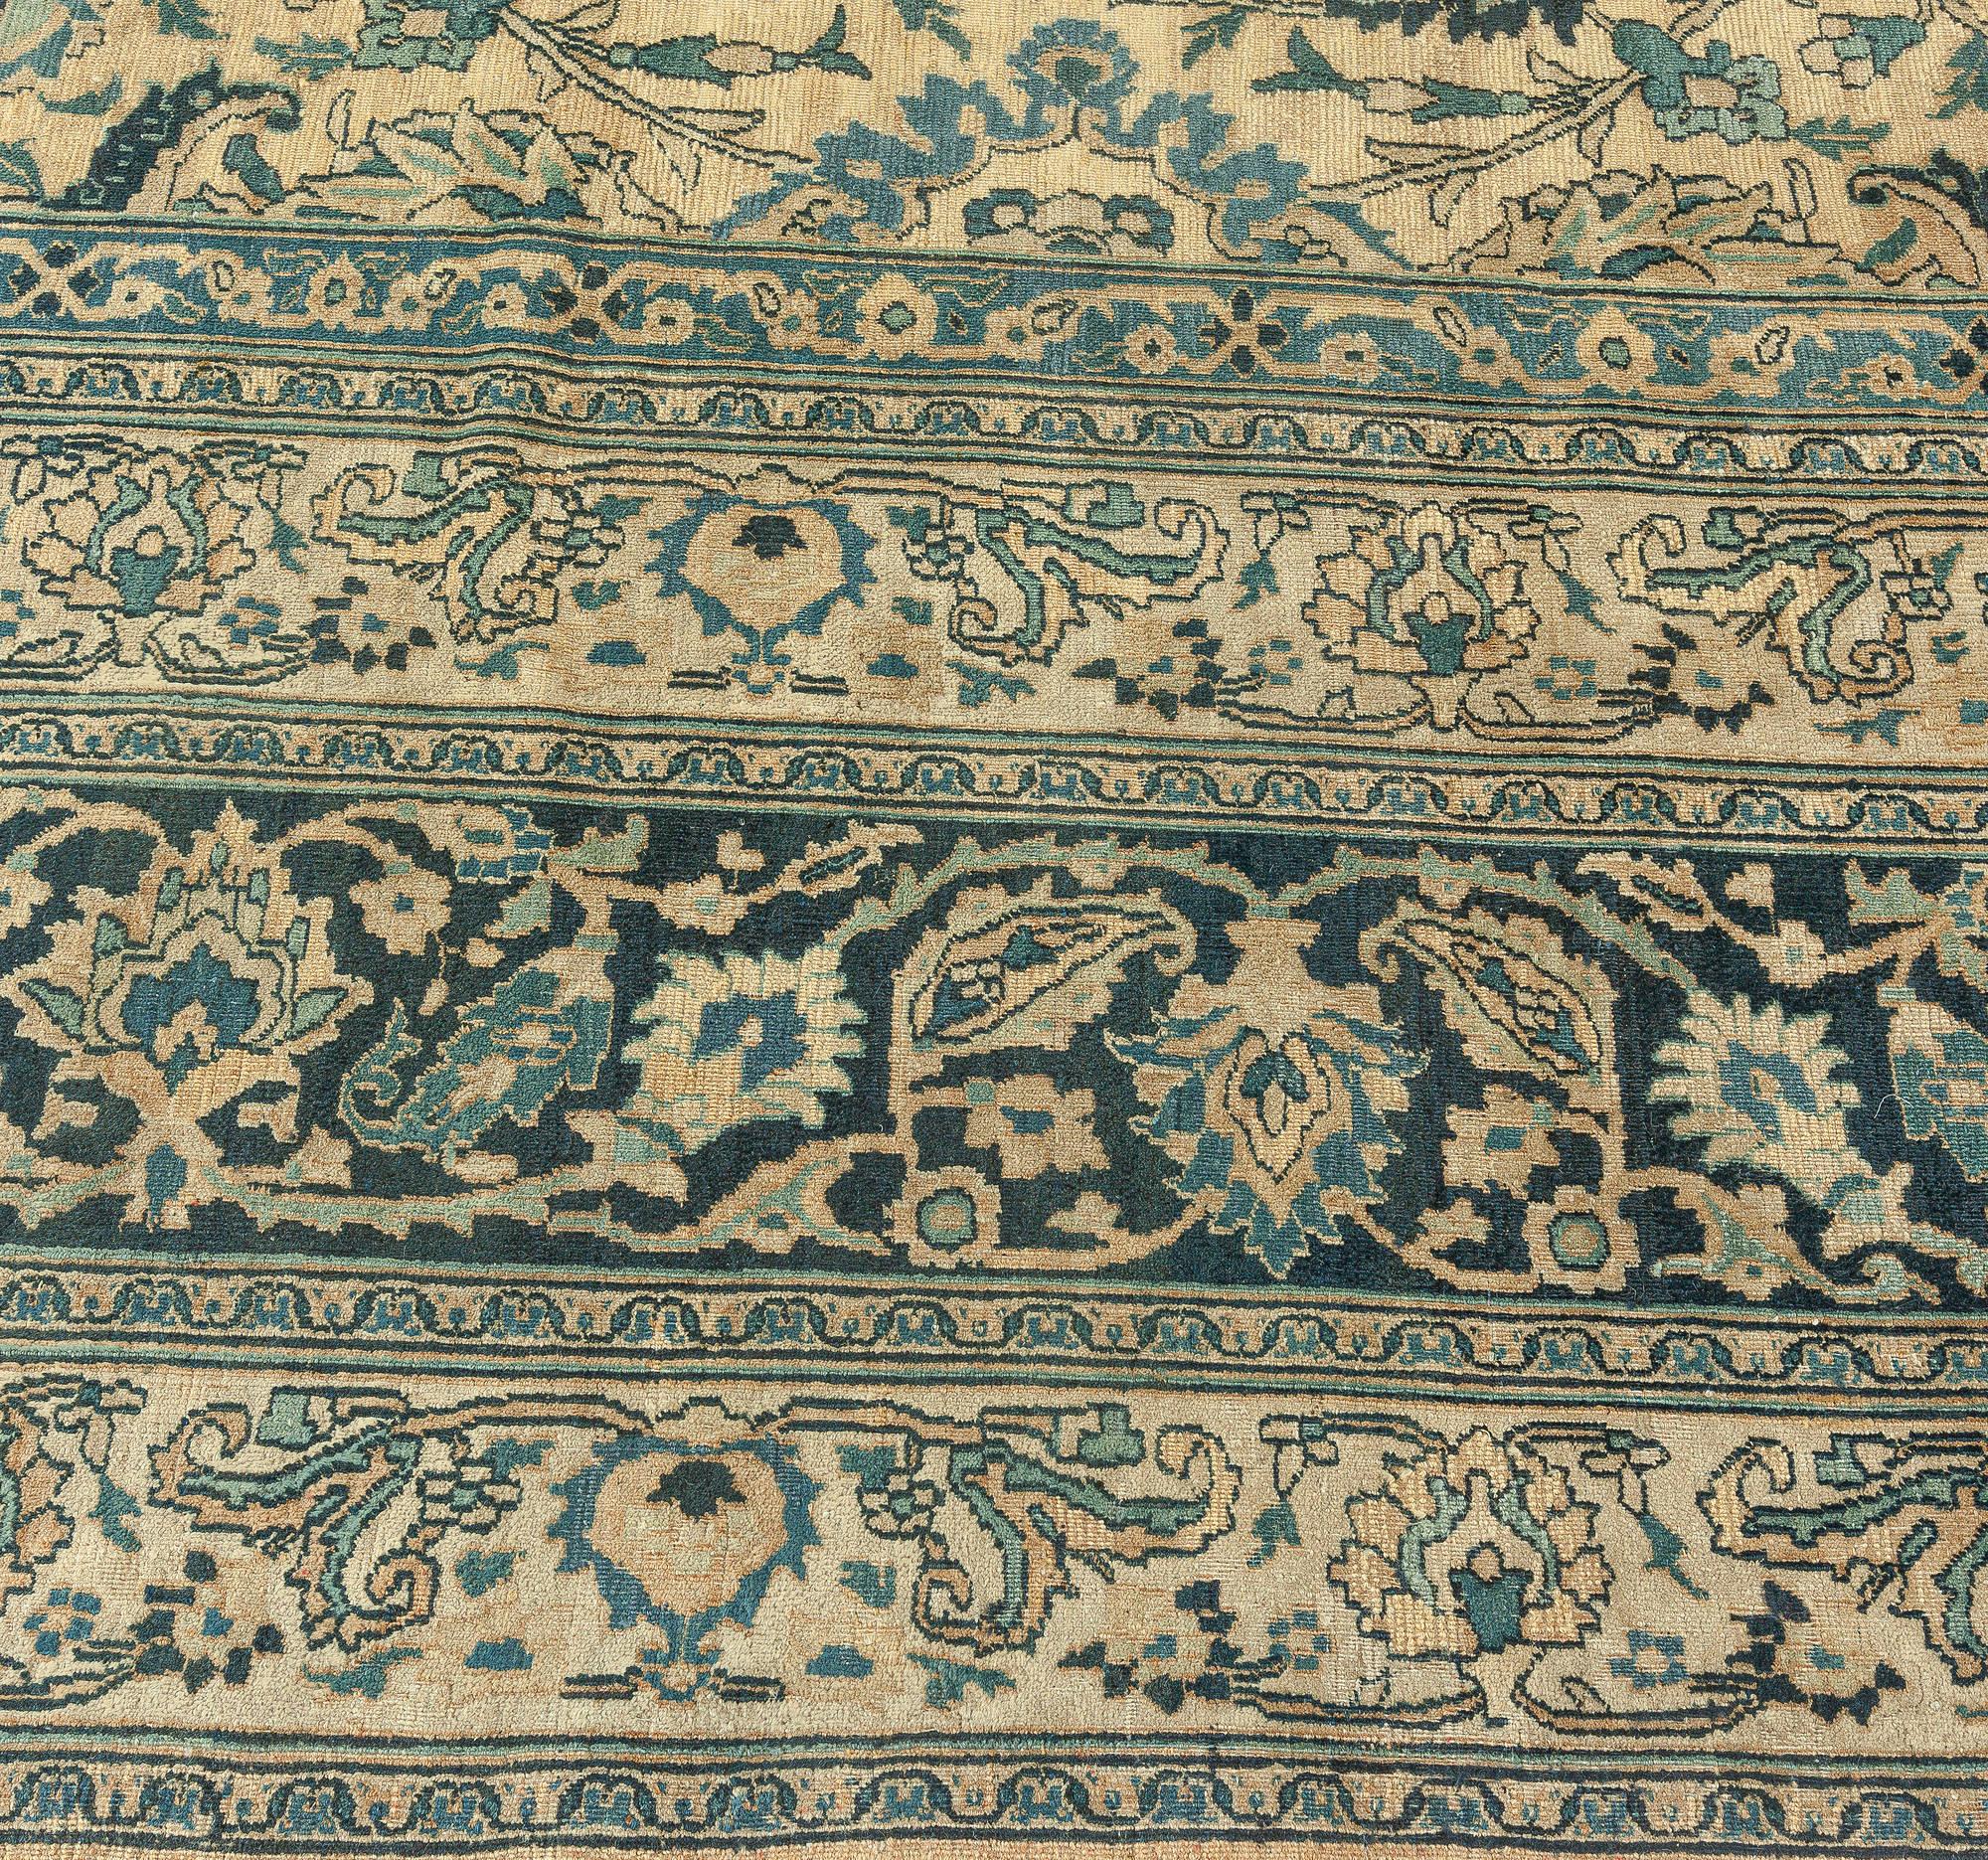 Antique Persian Meshad Handmade Wool Rug
Size: 13'3